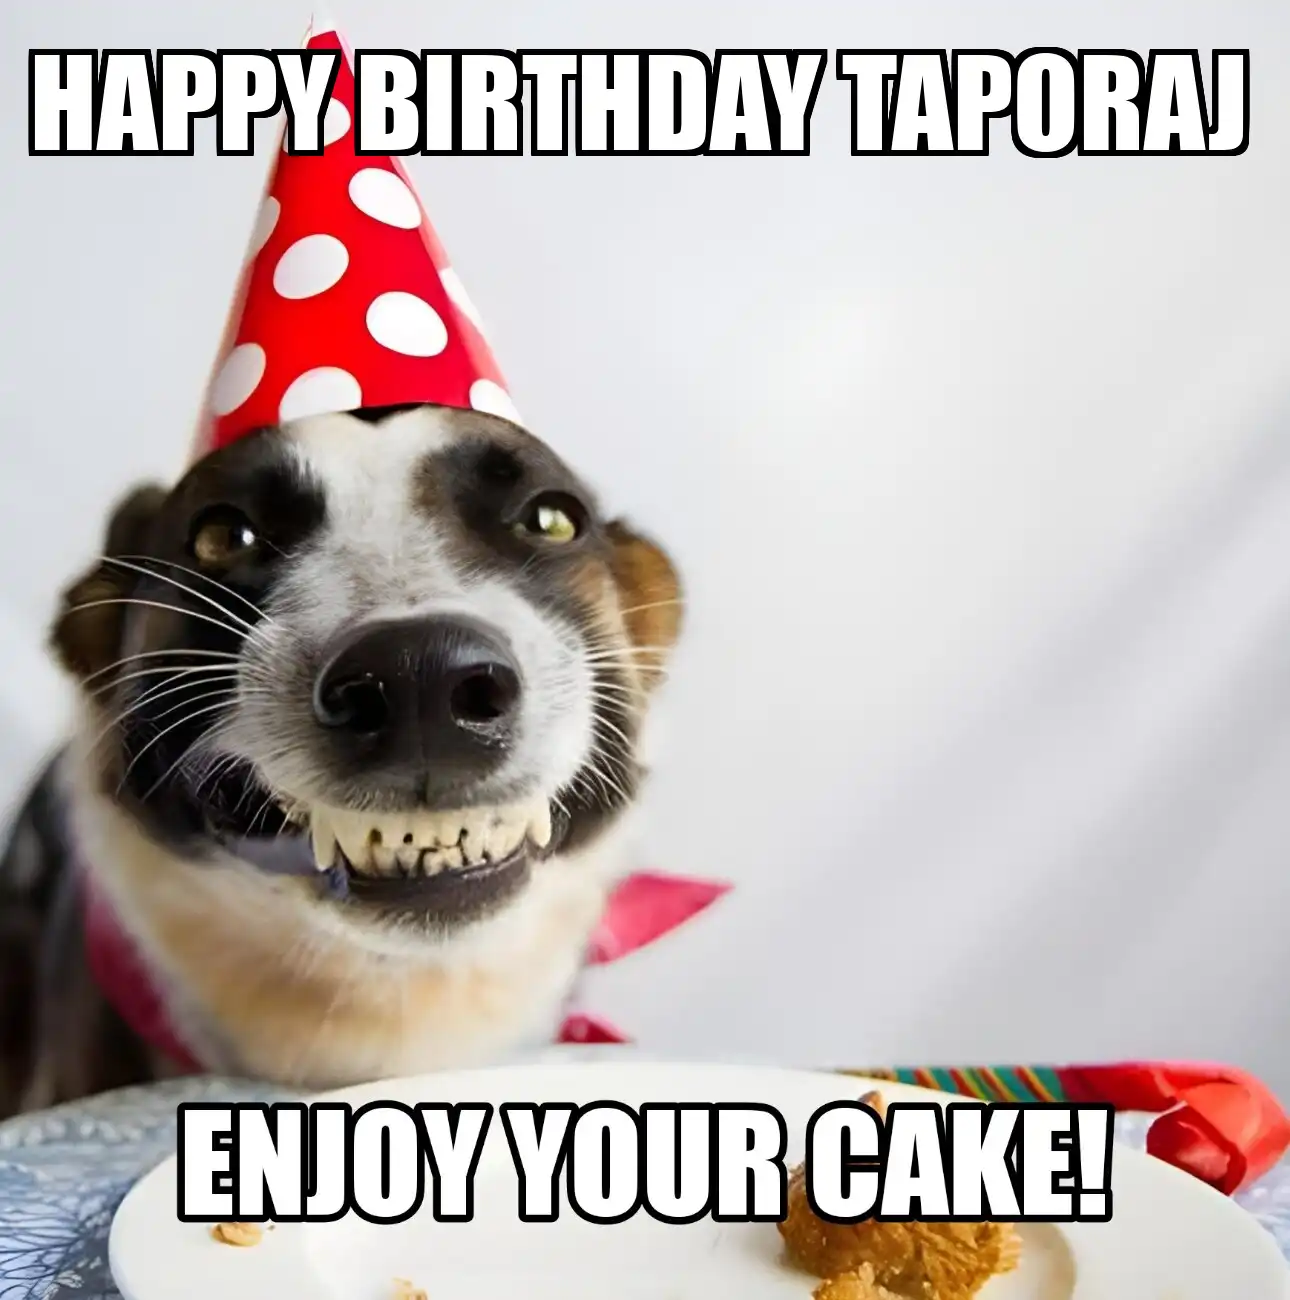 Happy Birthday Taporaj Enjoy Your Cake Dog Meme